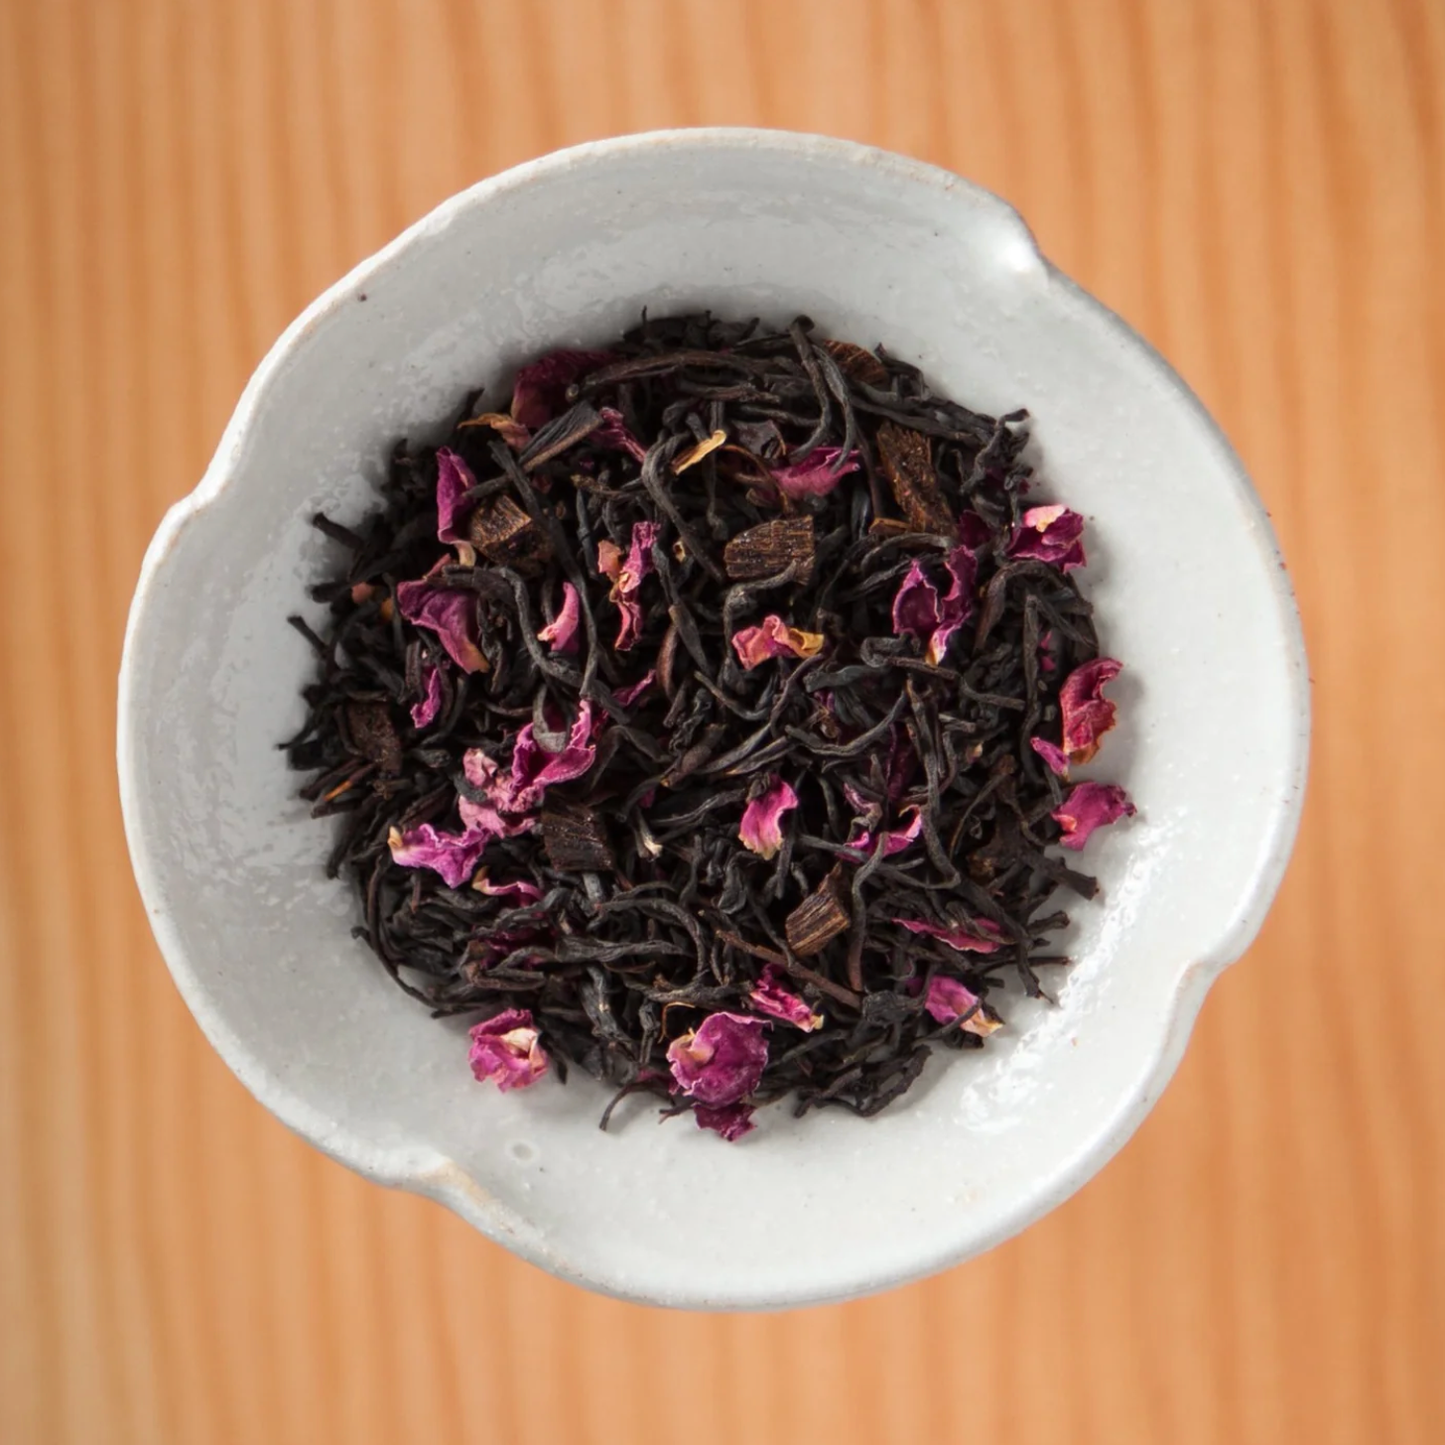 Vanilla Rose Ceylon Tea - Individual Envelope